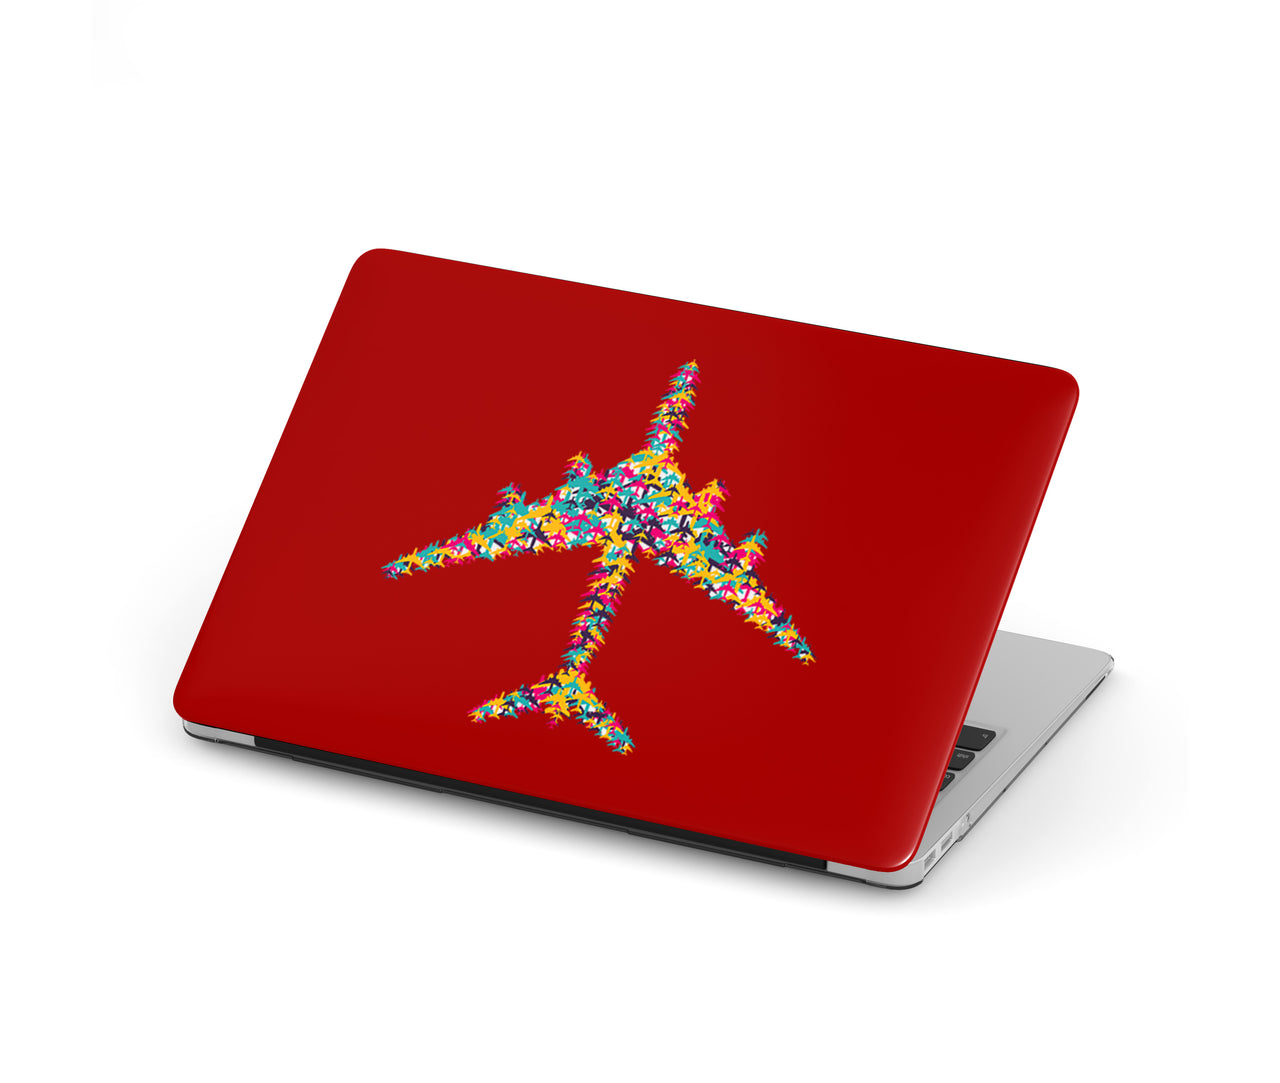 Colourful Airplane Designed Macbook Cases